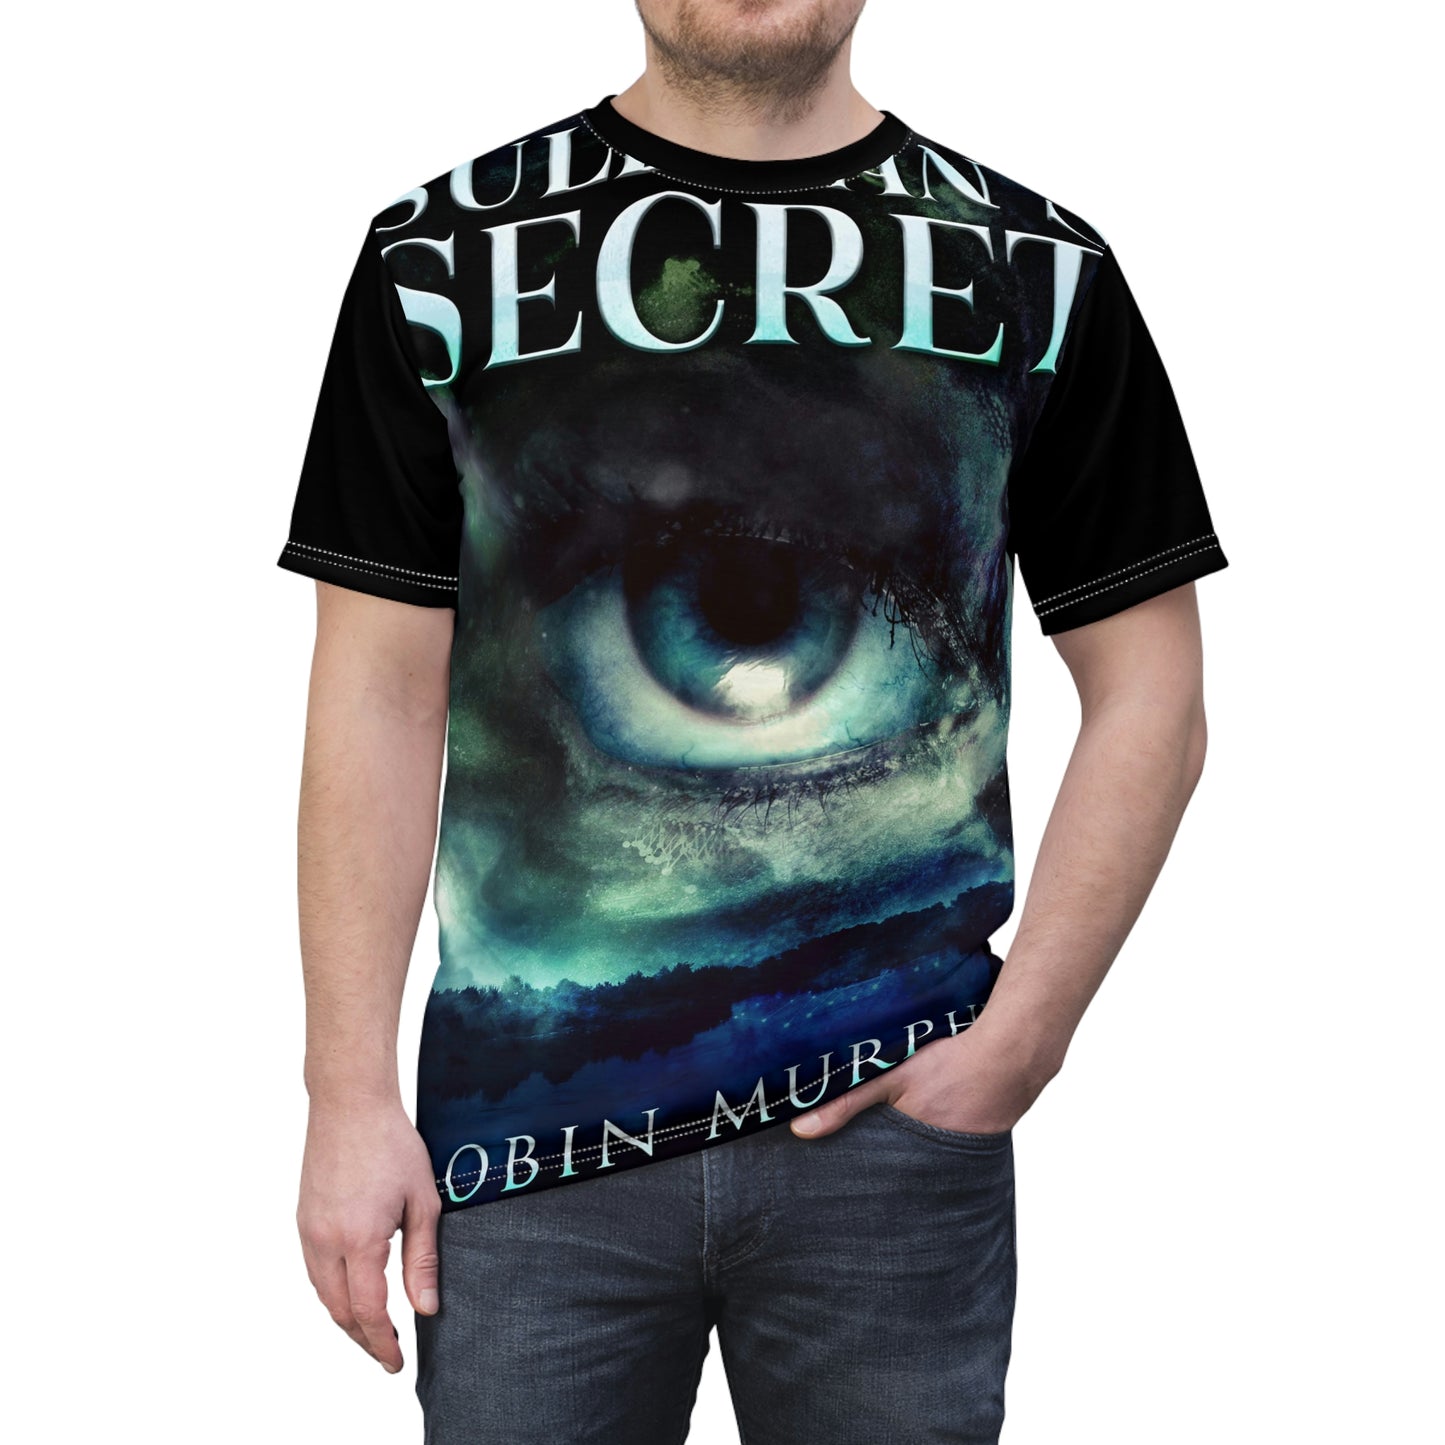 Sullivan's Secret - Unisex All-Over Print Cut & Sew T-Shirt